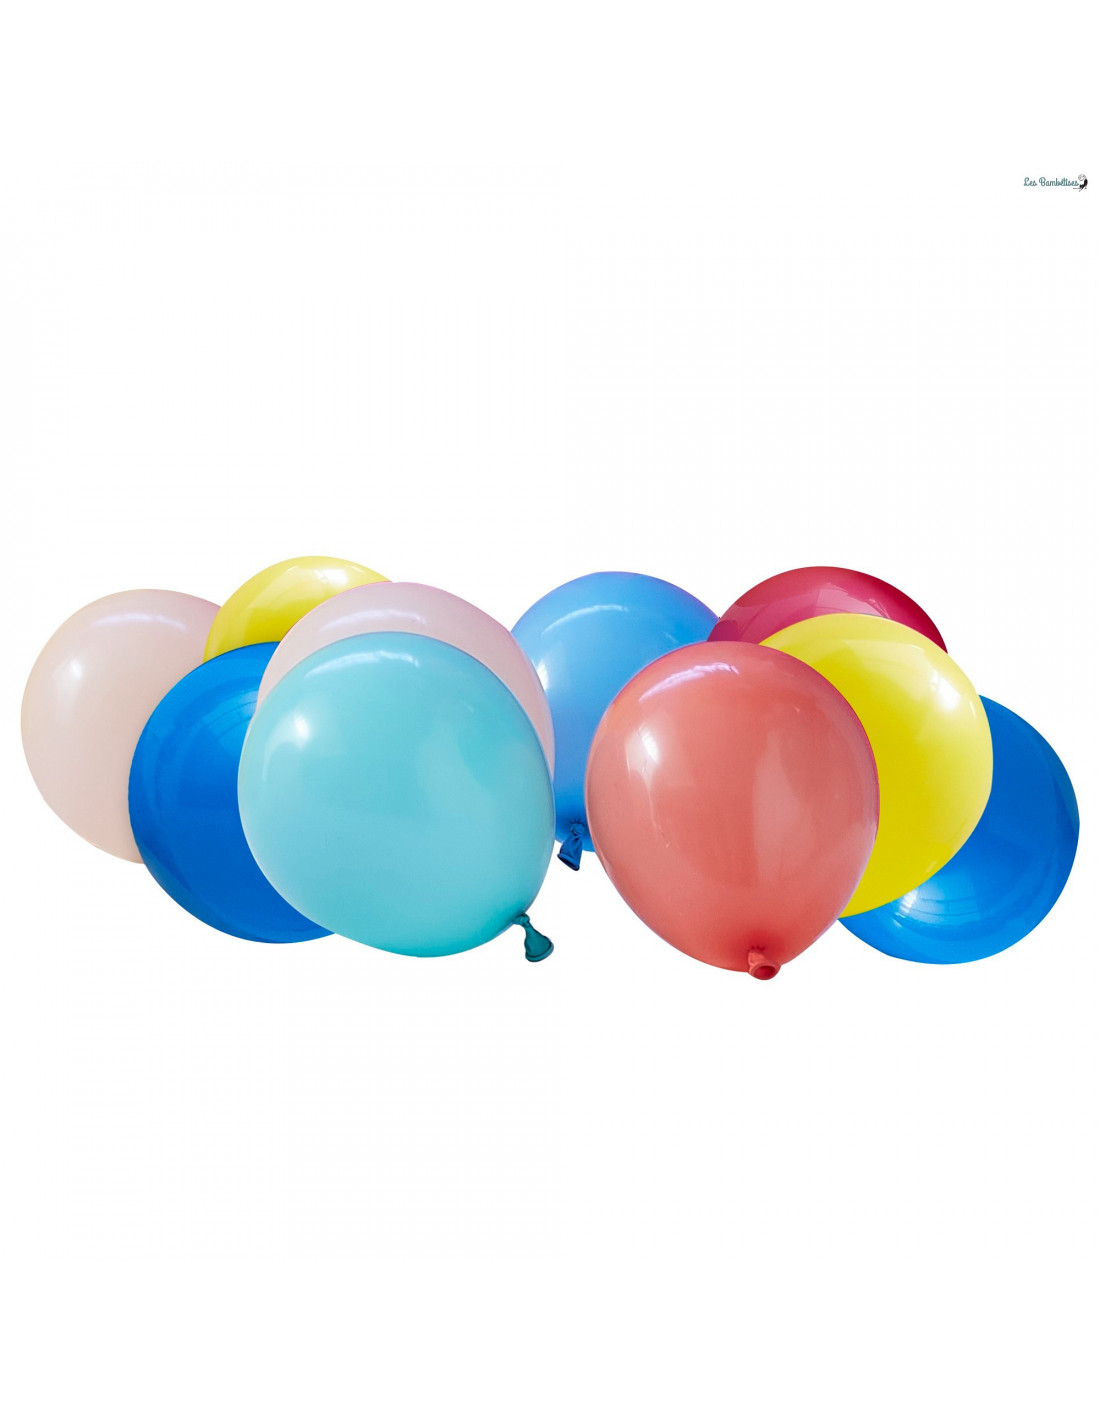 10 Ballons en latex Jaunes et Blancs - Les Bambetises